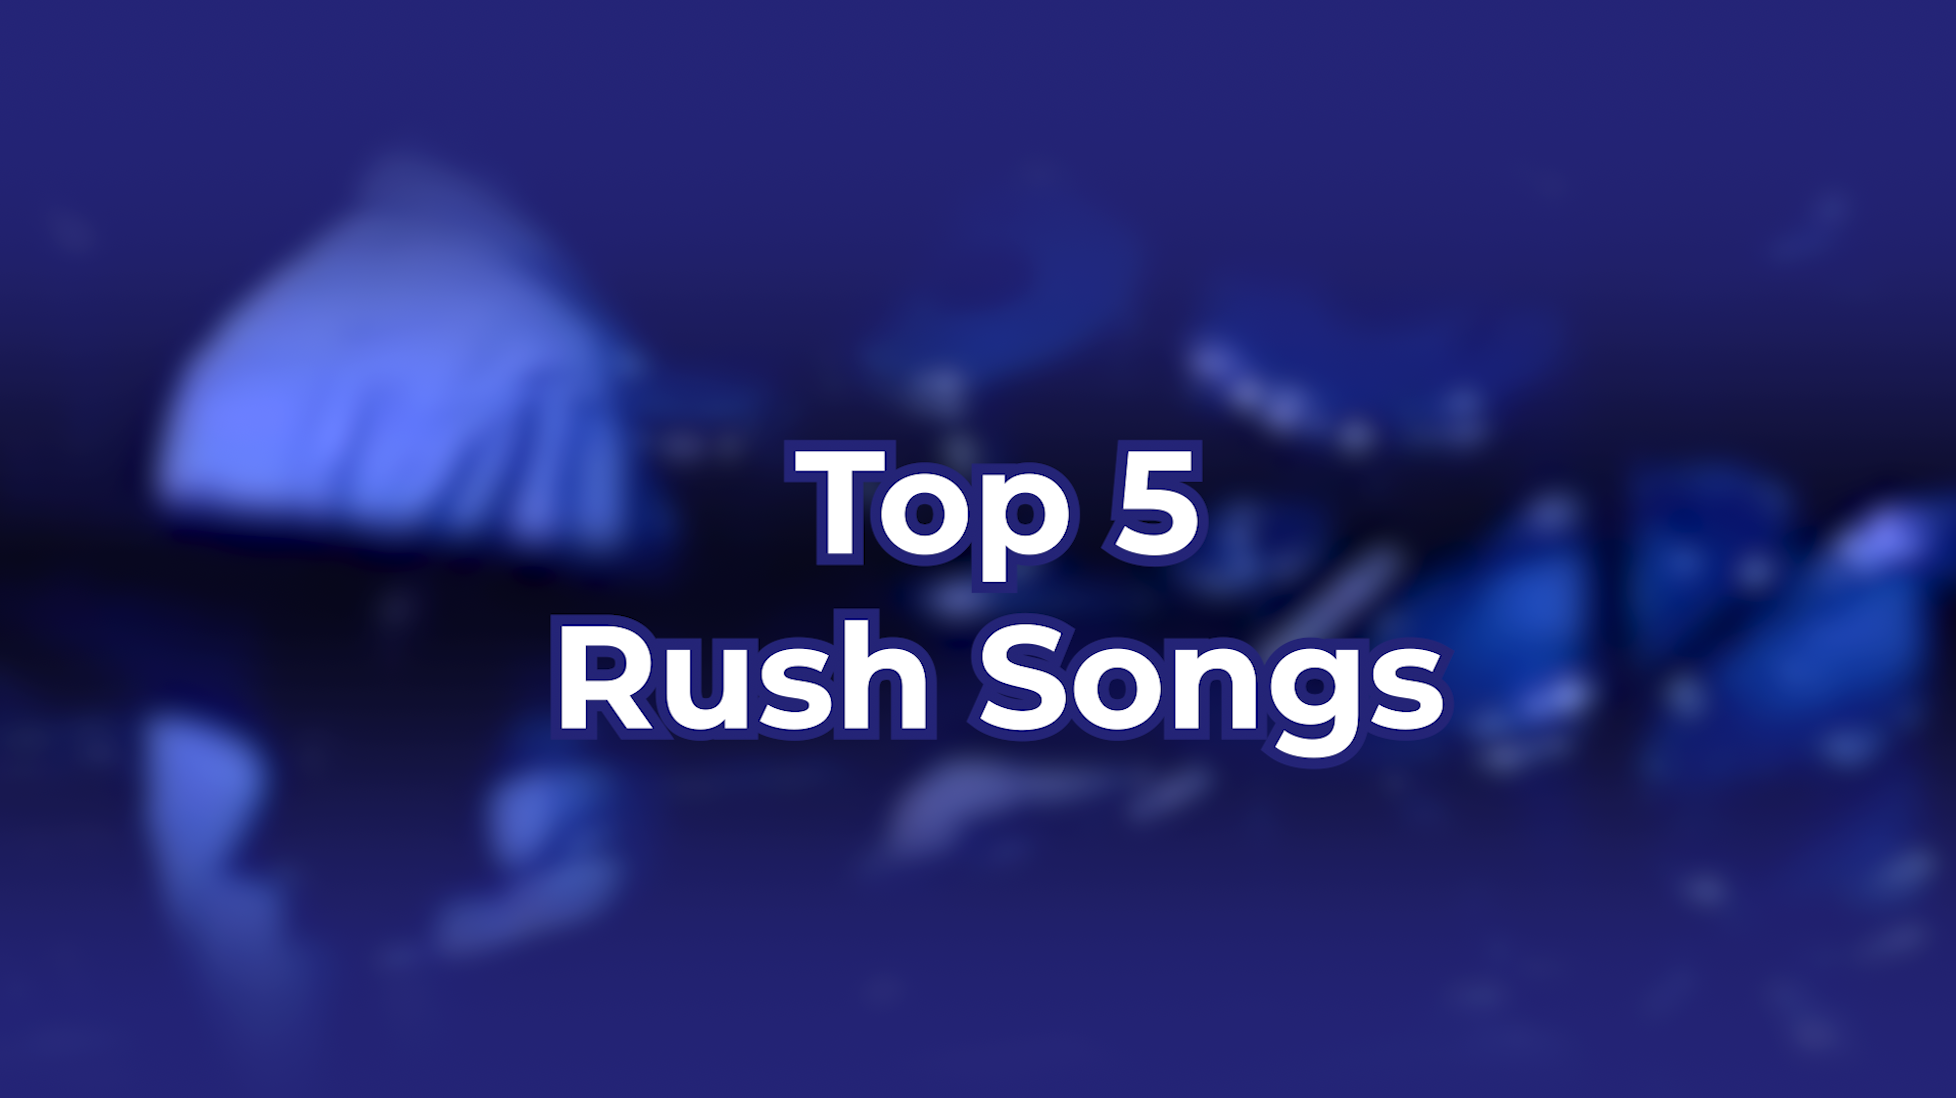 Top 5 Rush Songs